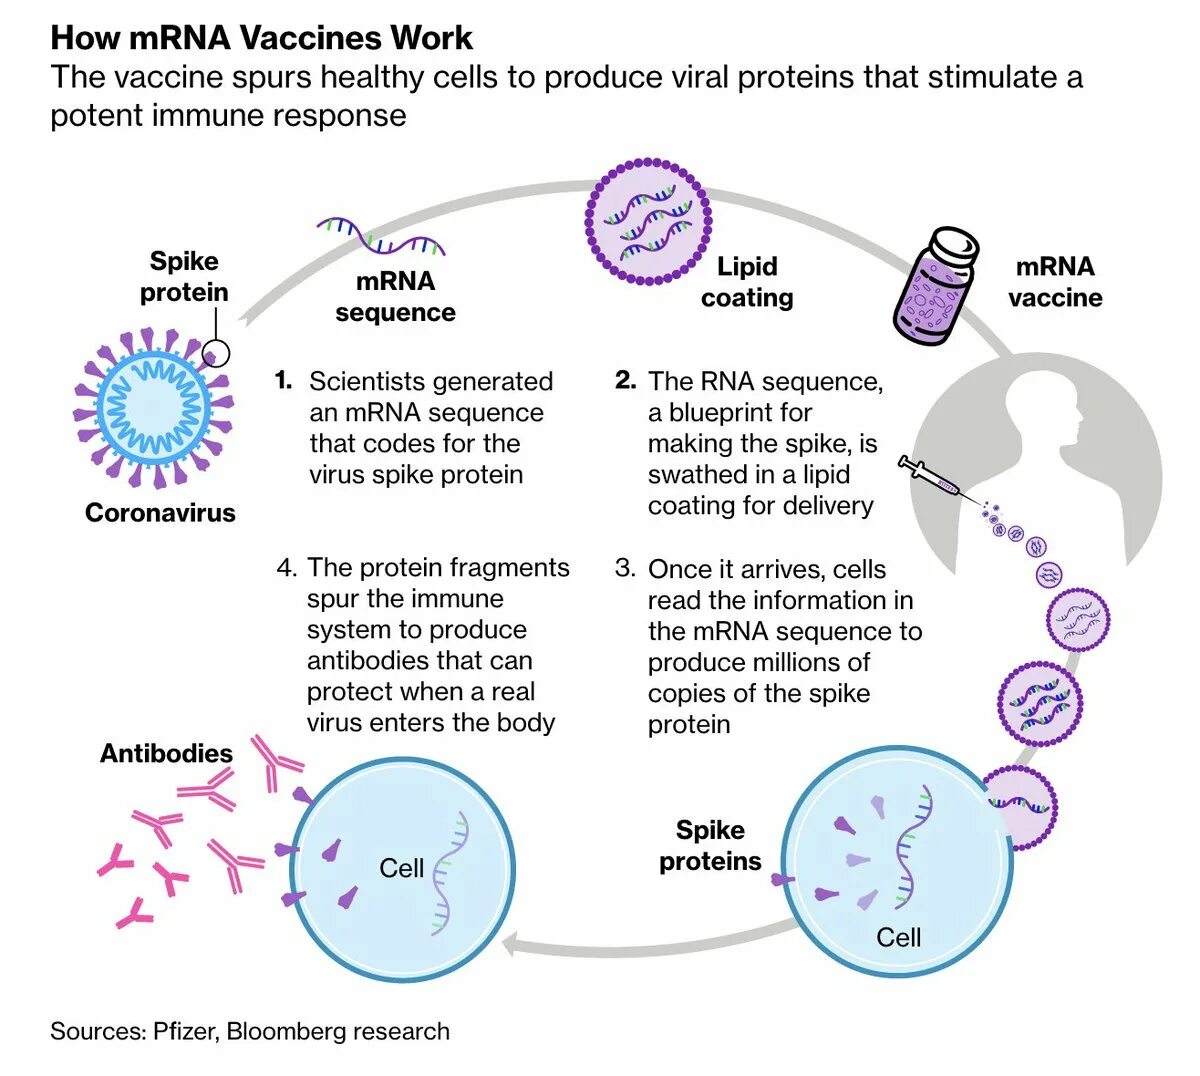 Covid 19 vaccine MRNA. Вакцина коронавирус MRNA. МРНК вакцина. MRNA vaccine Pfizer.